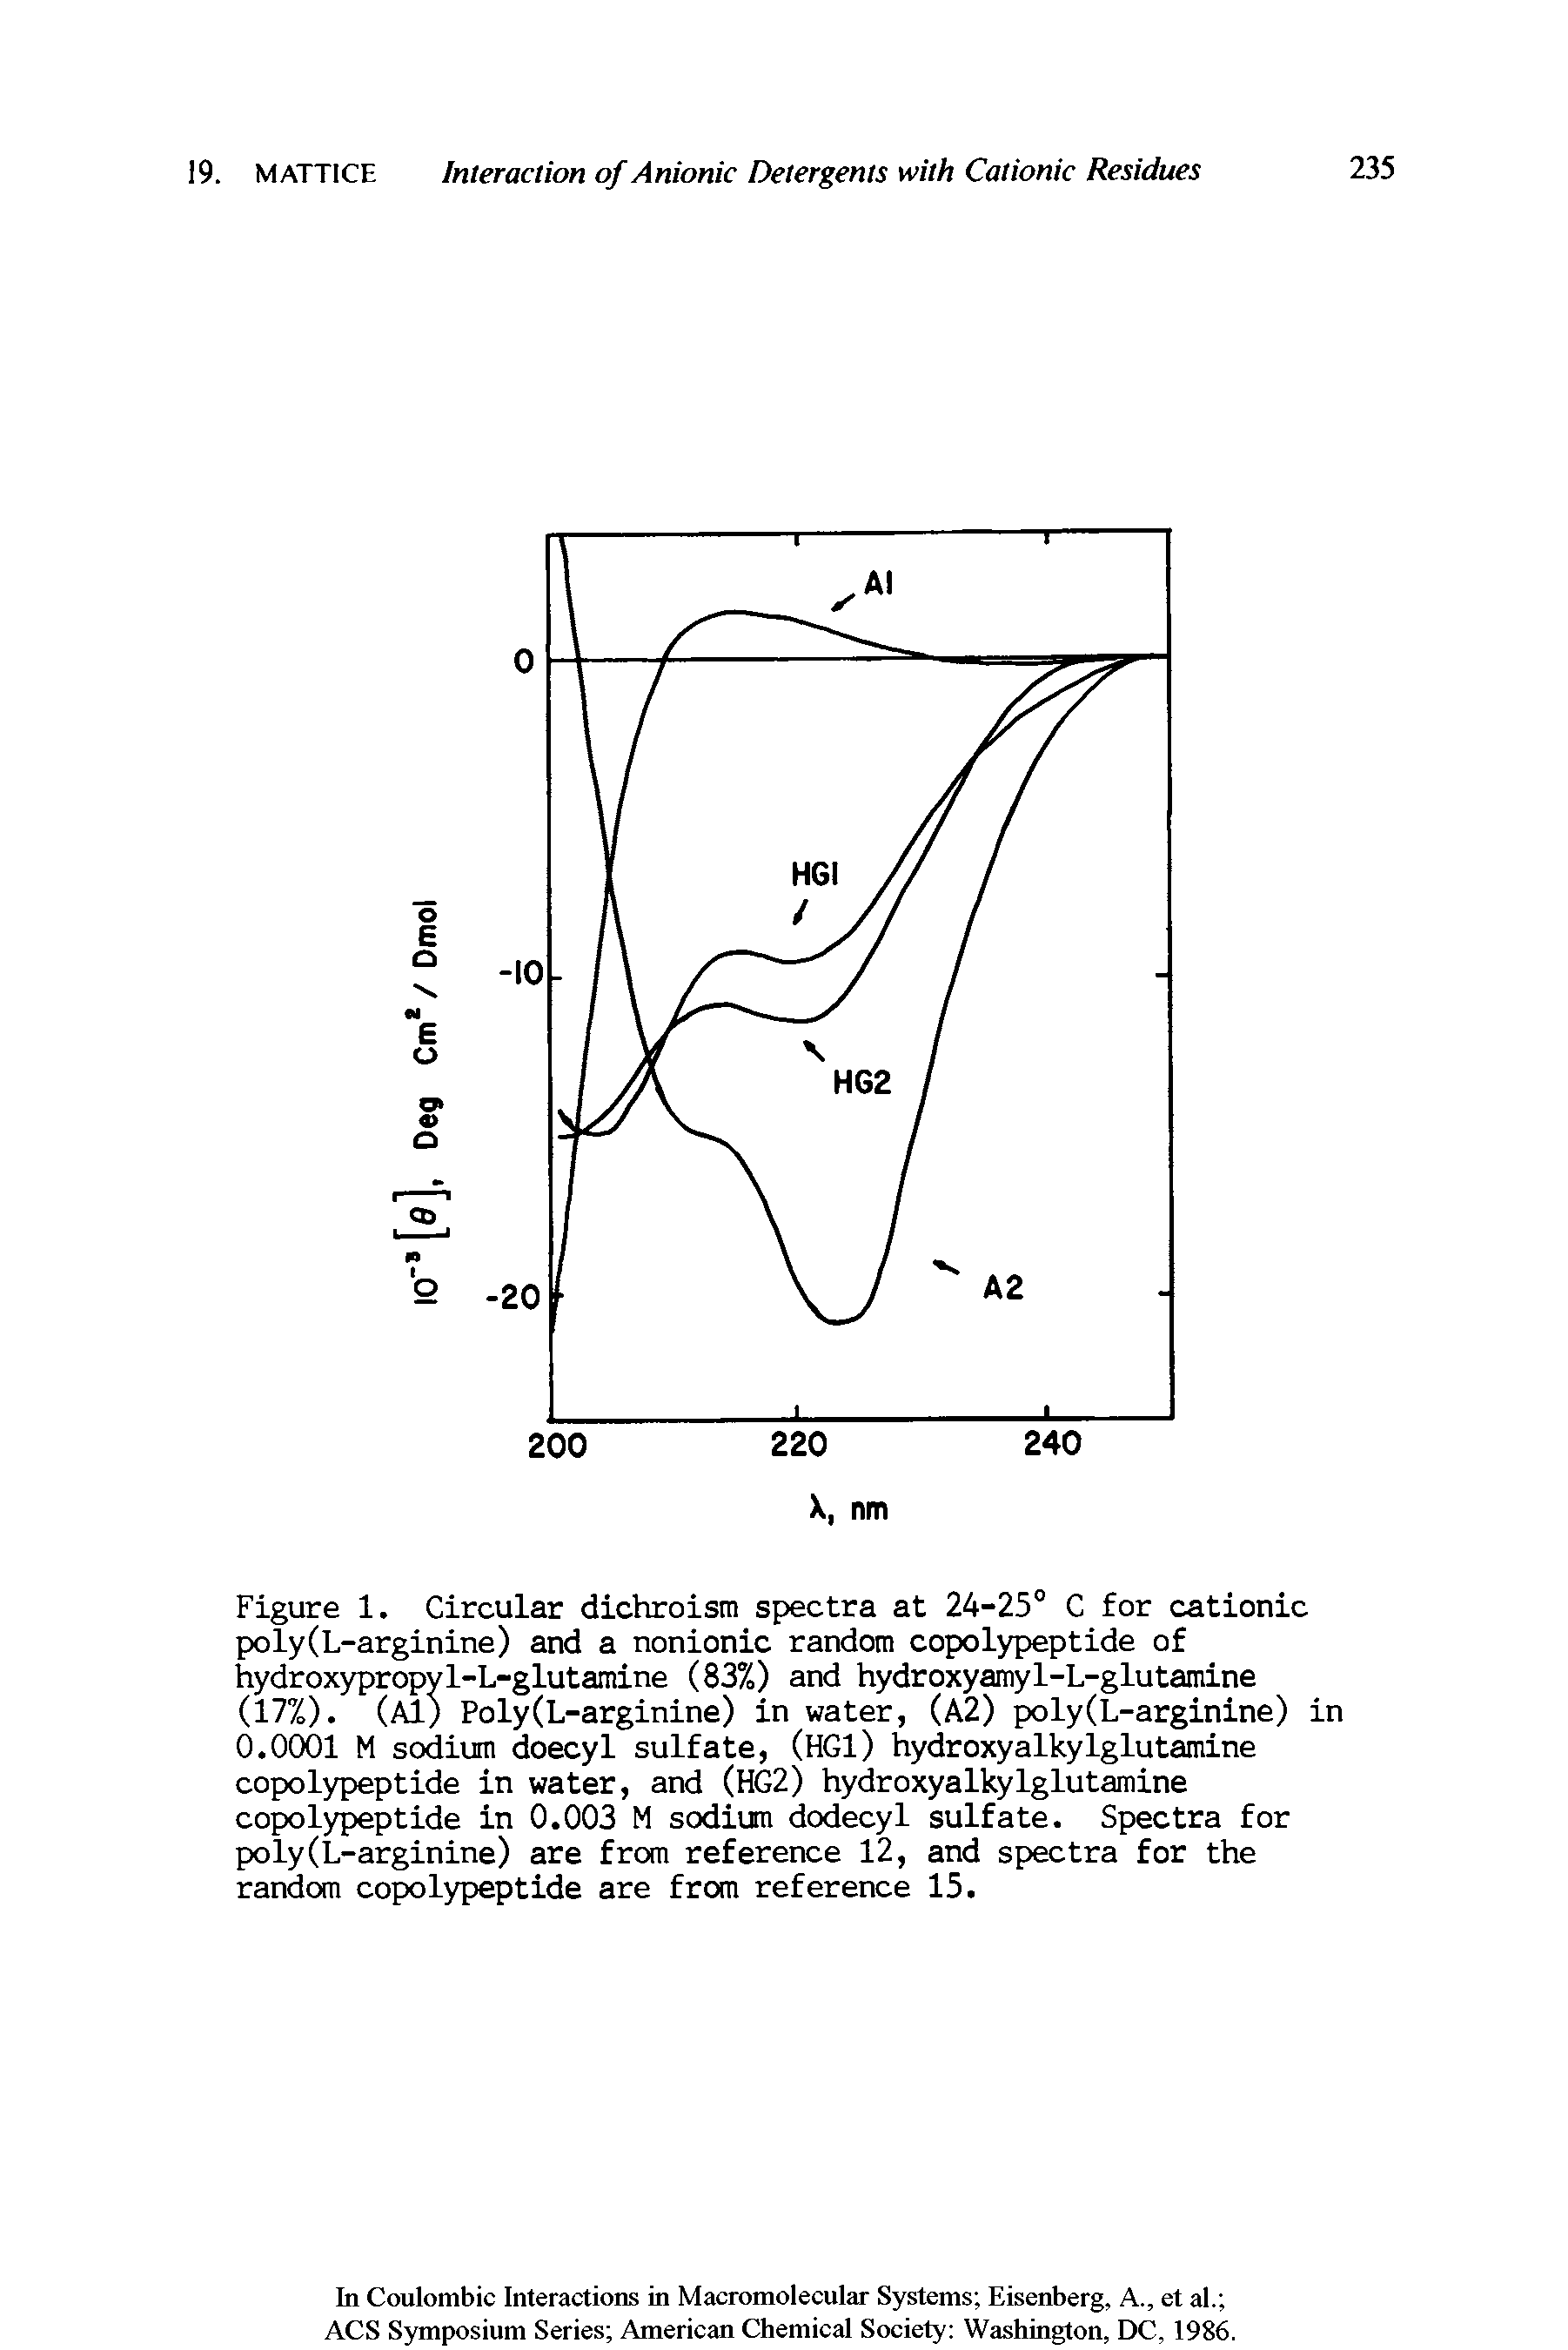 Figure 1. Circular dichroism spectra at 24-25° C for cationic poly(L-arginine) and a nonionic random copolypeptide of hydroxypropyl-L-glutamine (83%) and hydroxyamyl-L-glutamine (17%). (Al) Poly(L-arginine) in water, (A2) poly(L-arginine) in 0.0001 M sodium doecyl sulfate, (HG1) hydroxyalkylglutamine copolypeptide in water, and (HG2) hydroxyalkylglutamine copolypeptide in 0.003 M sodium dodecyl sulfate. Spectra for poly(L-arginine) are from reference 12, and spectra for the random copolypeptide are from reference 15.